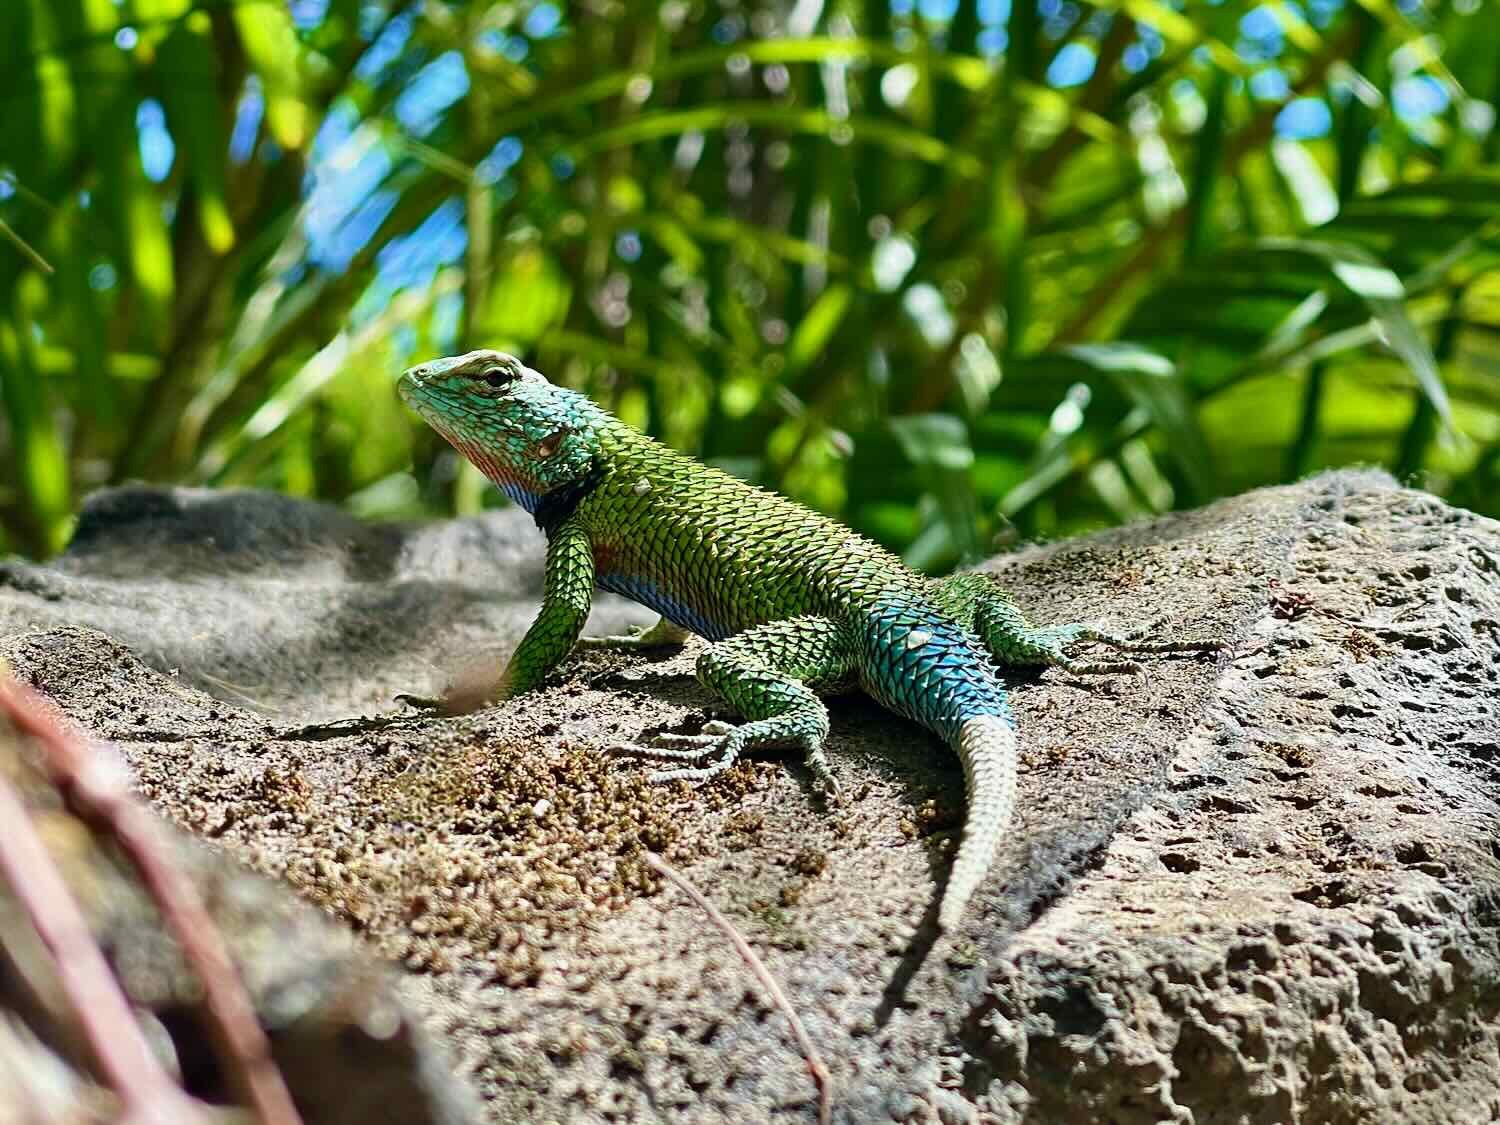 An emerald swift lizard sunbathed on a large rock in the garden